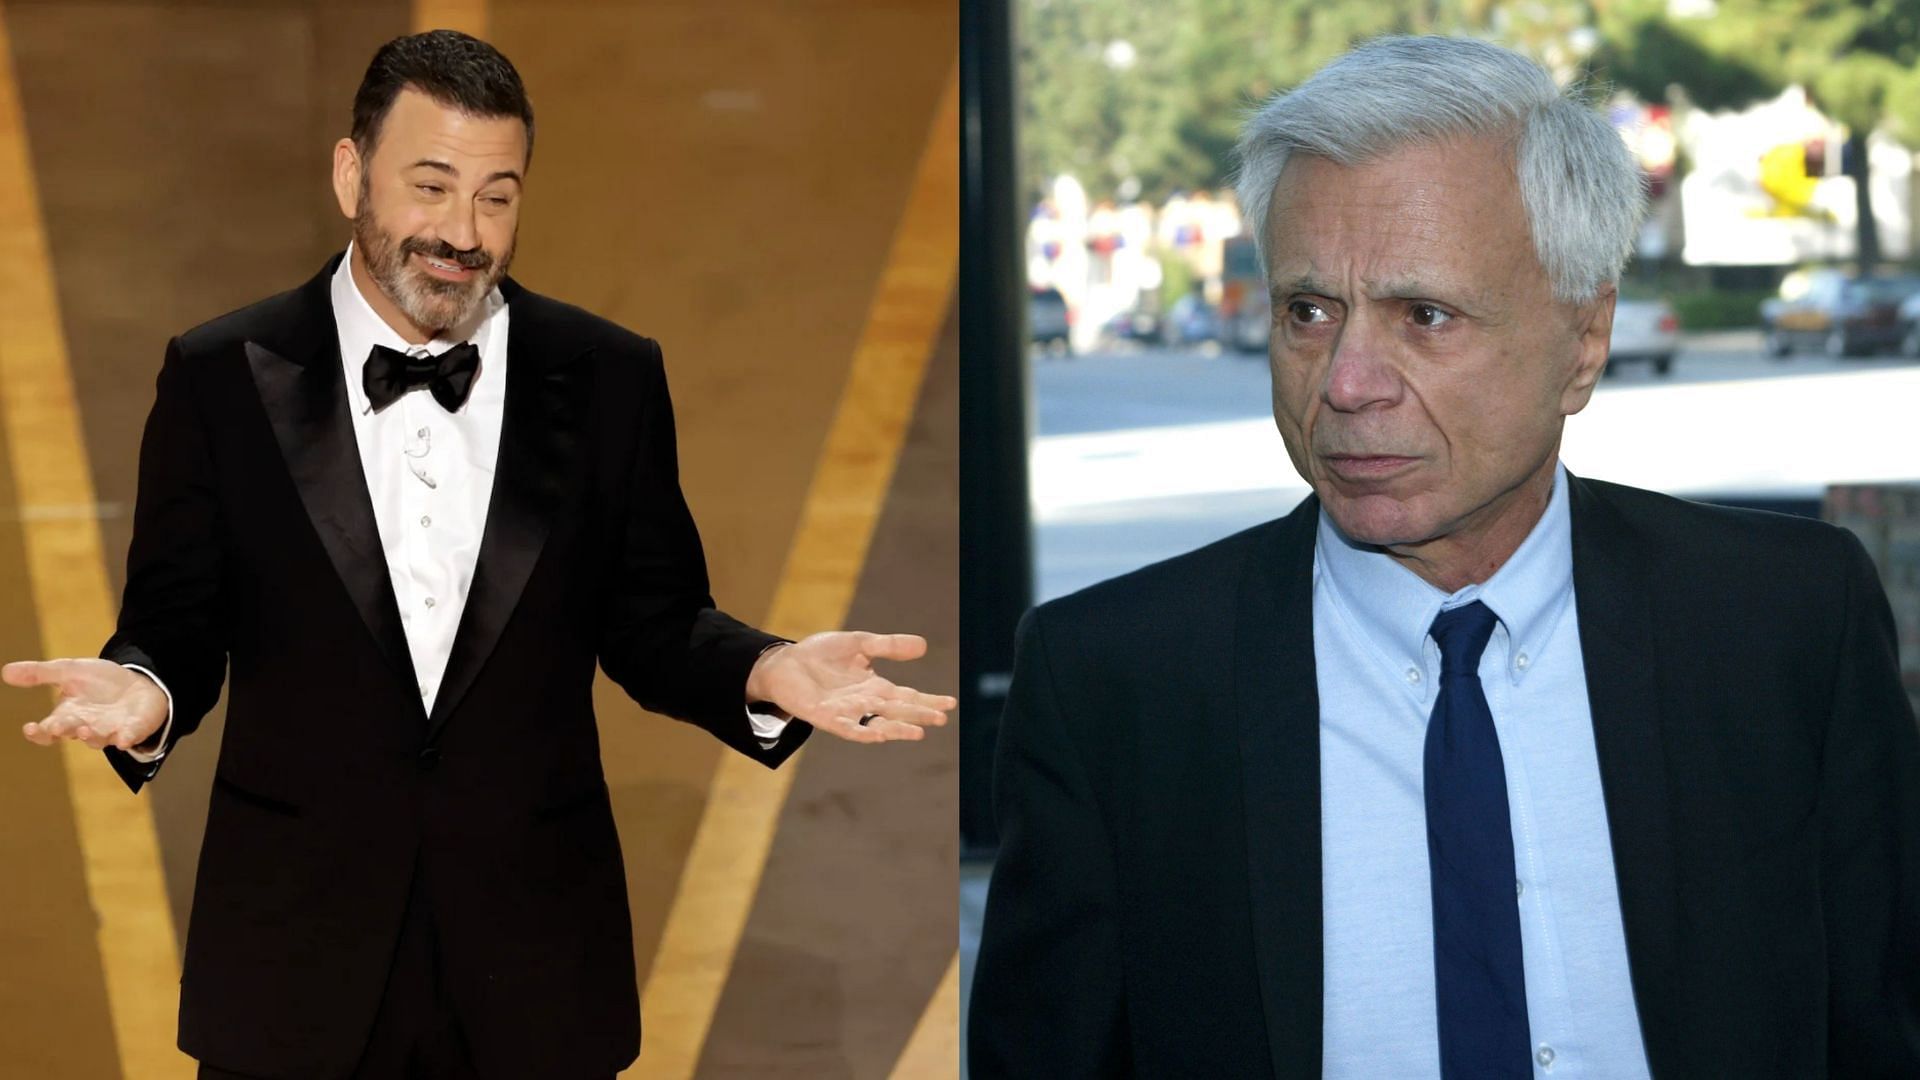 Jimmy Kimmel and Robert Blake. (Photos via Getty Images)